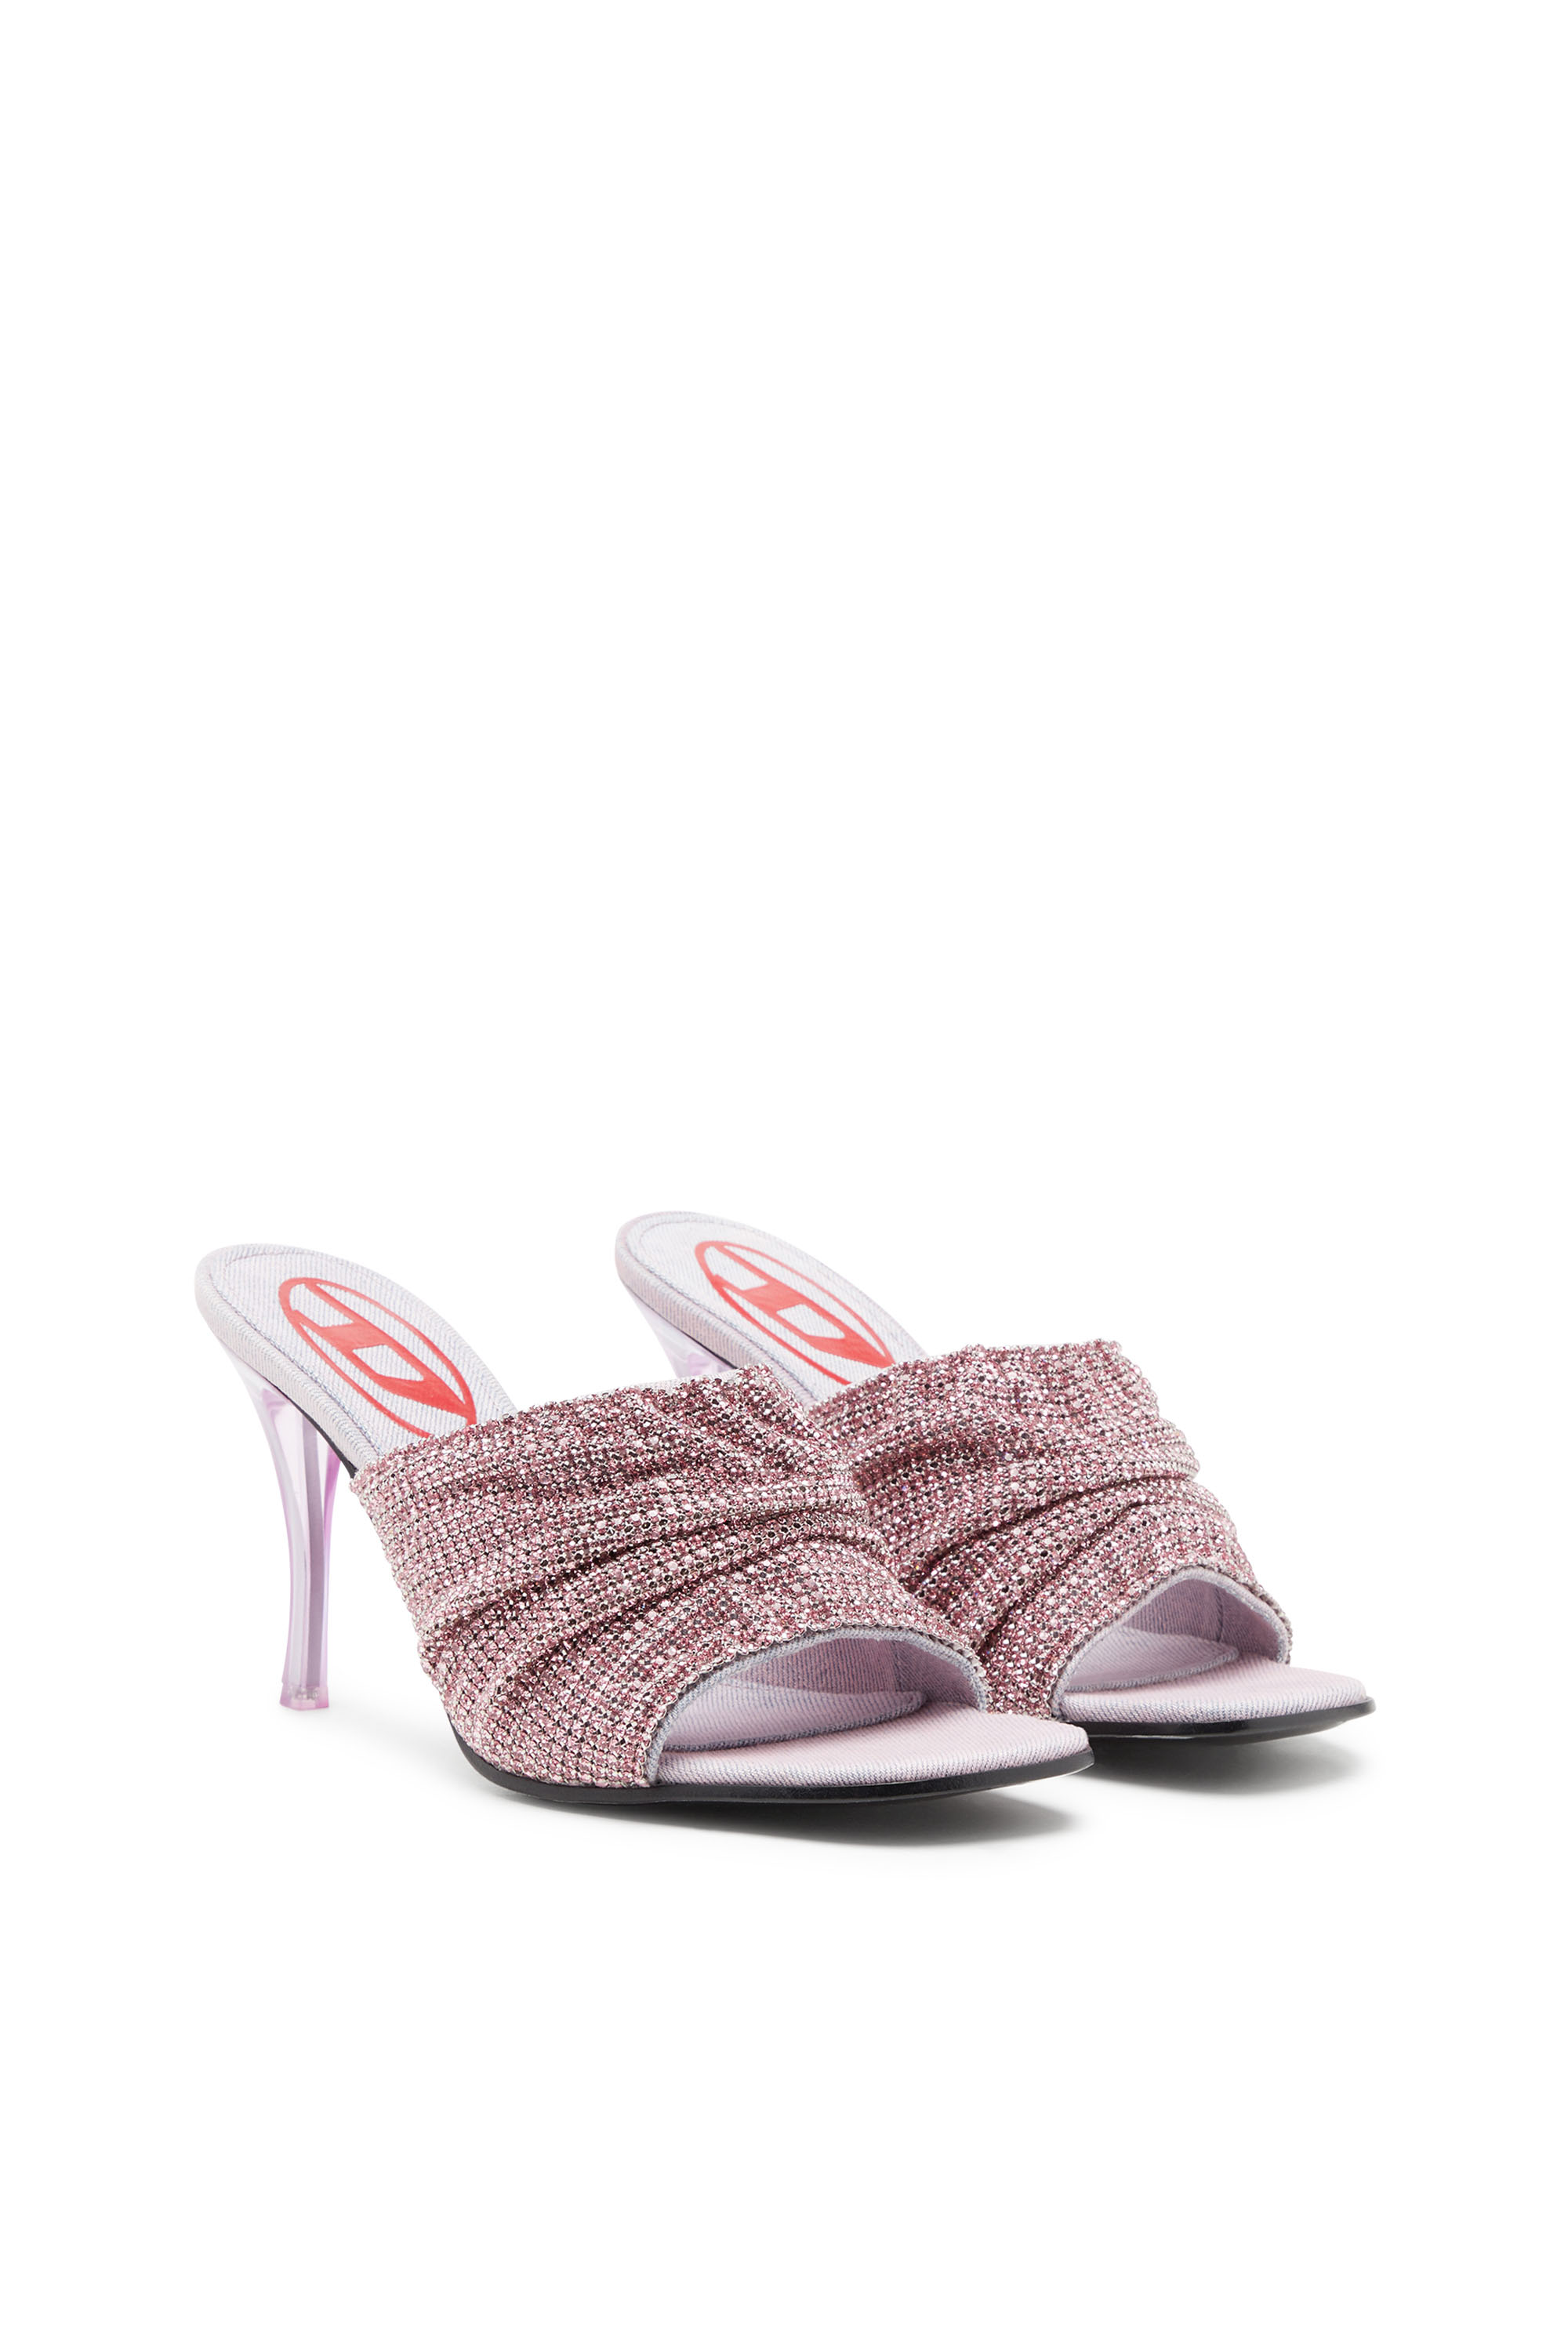 Diesel - D-SYDNEY SDL S, Woman D-Sydney Sdl S Sandals - Mule sandals with rhinestone band in Pink - Image 2